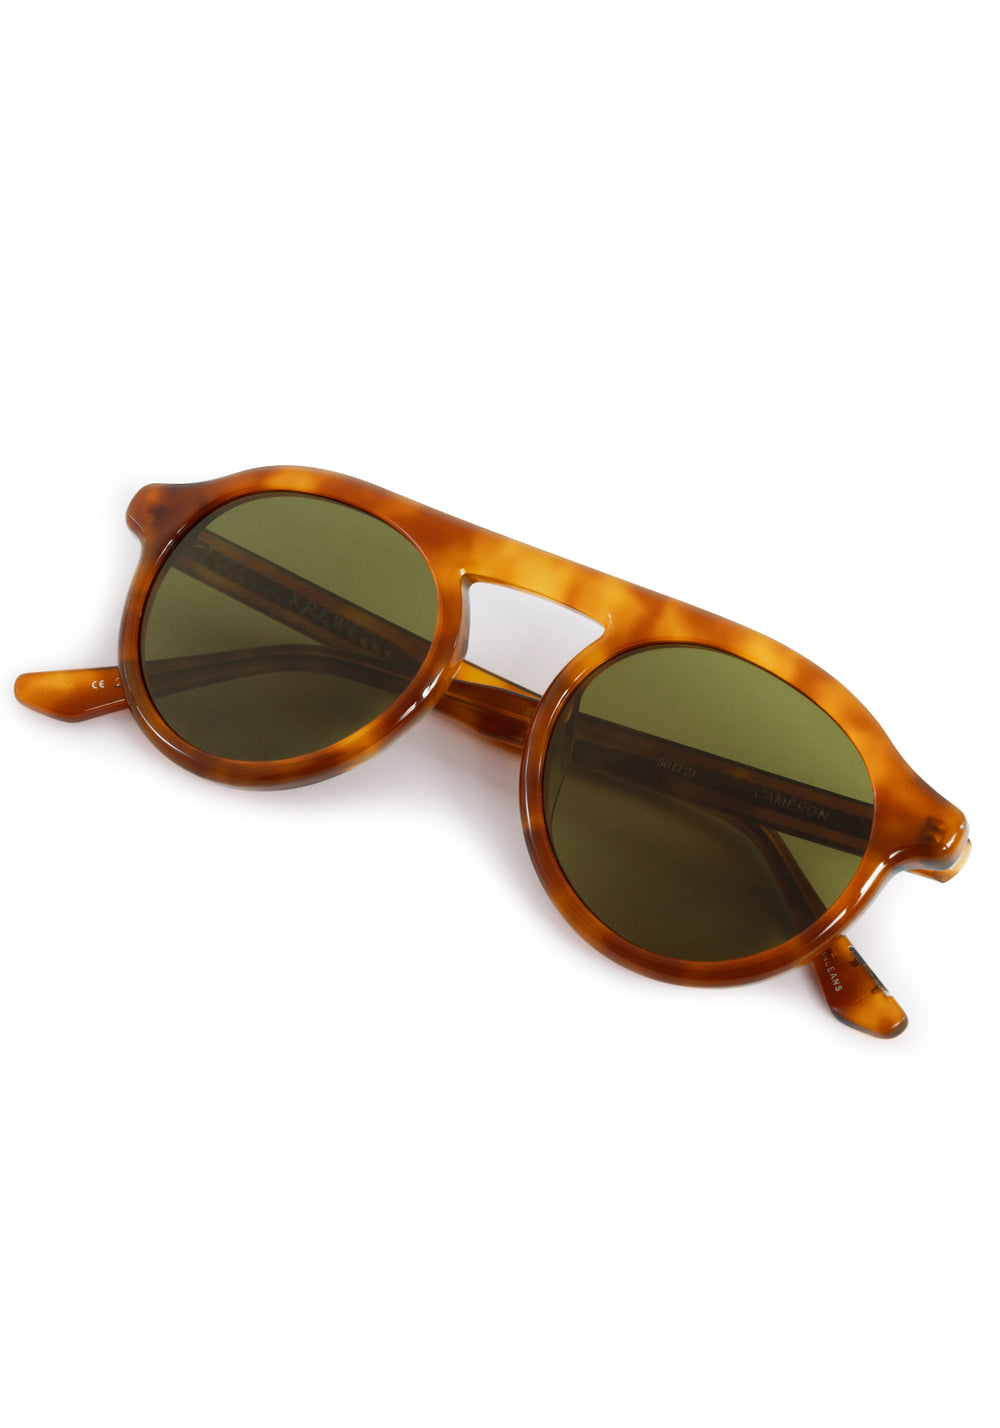 KREWE SUNGLASSES - CAMERON | Amaro handcrafted, luxury orange acetate round sunglasses